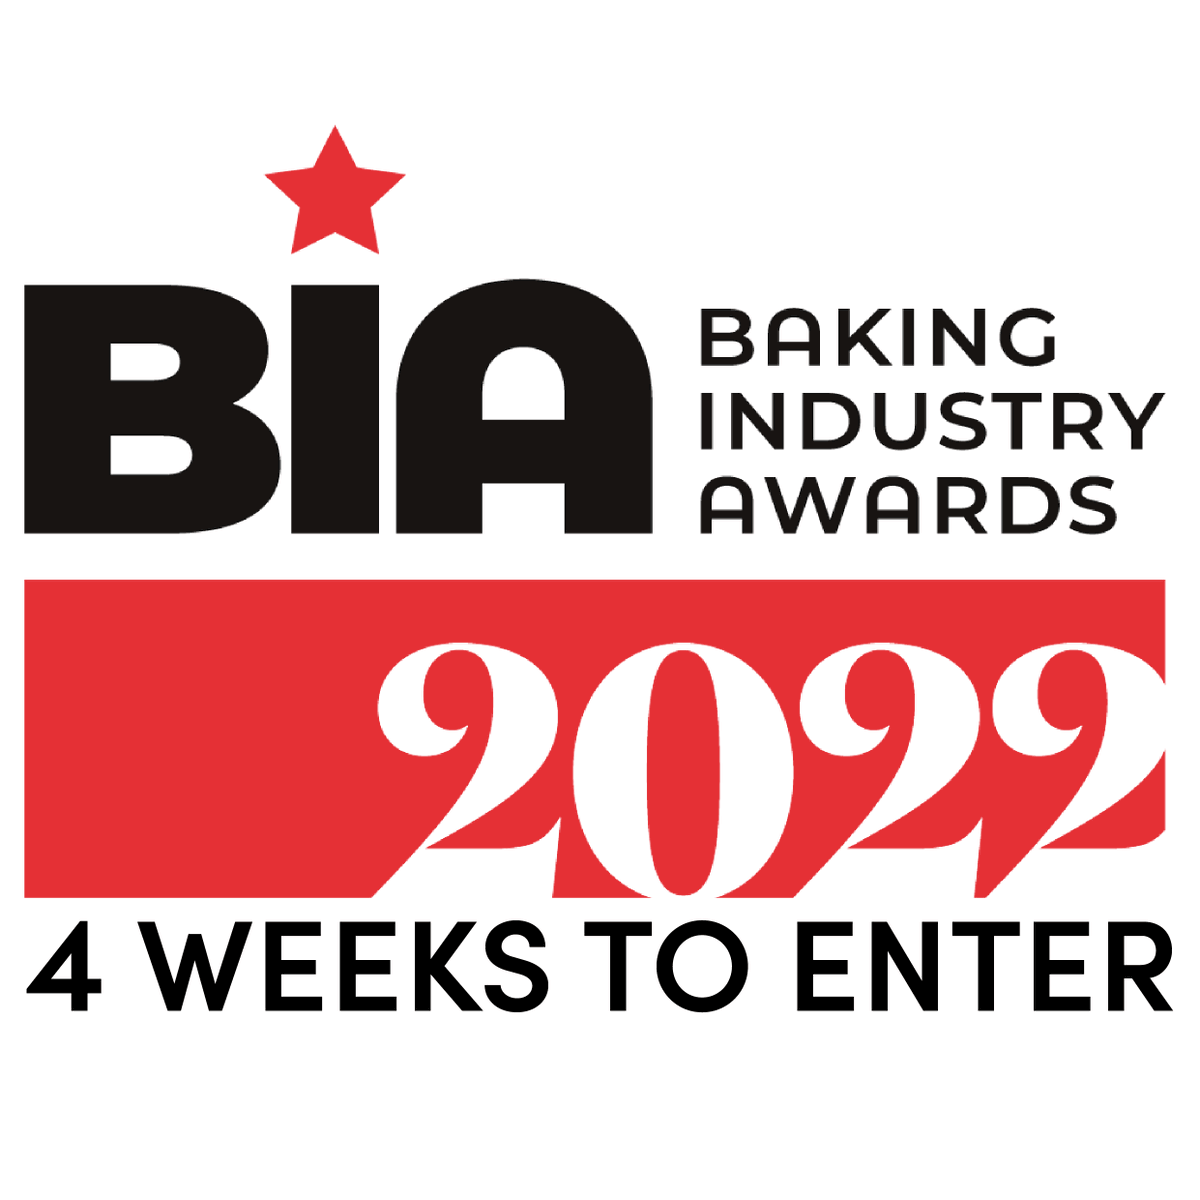 TIME IS TICKING! ONLY 4 WEEKS TO ENTER Follow the link in our BIO to enter! #bakeryawards #bakeroftheyear #bakery #baking #baker #awards @britishbaker